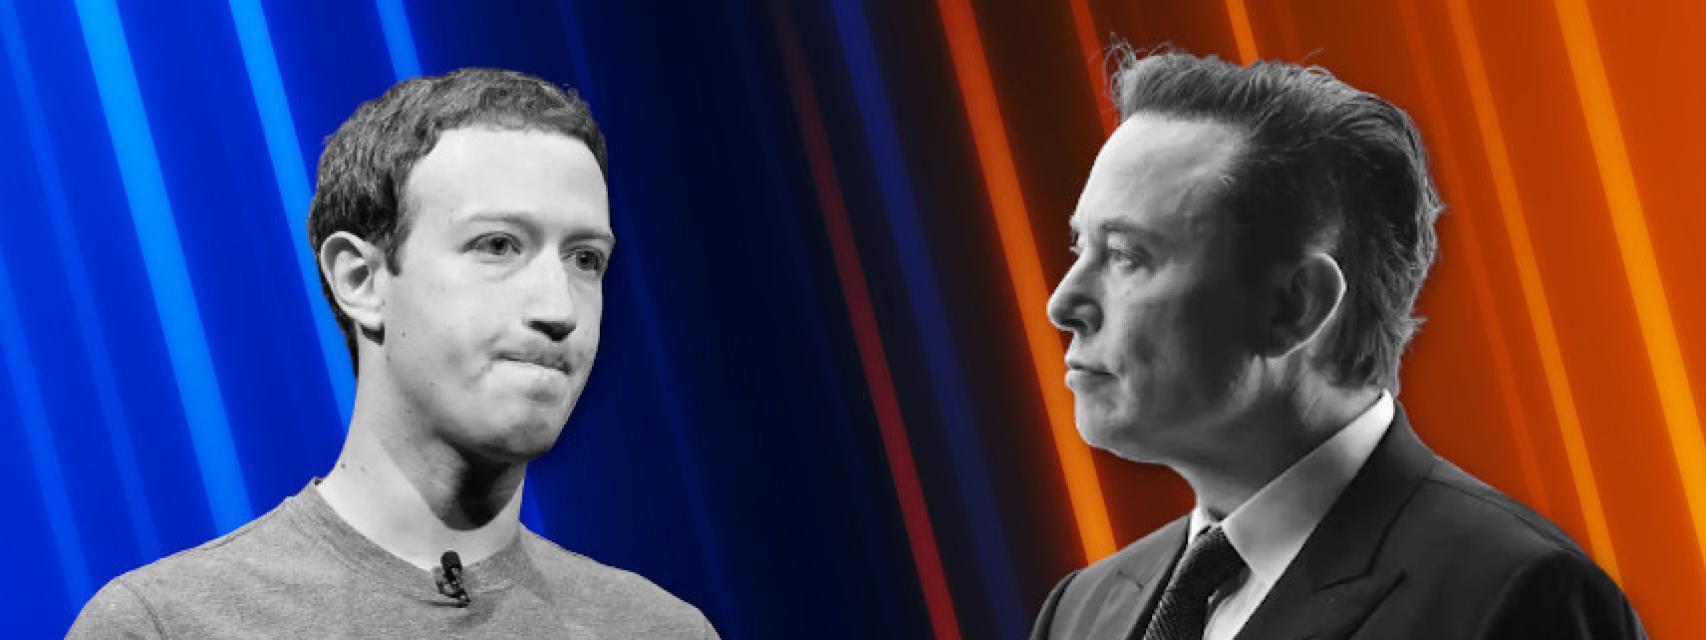 Zuckerberg y Musk se retan